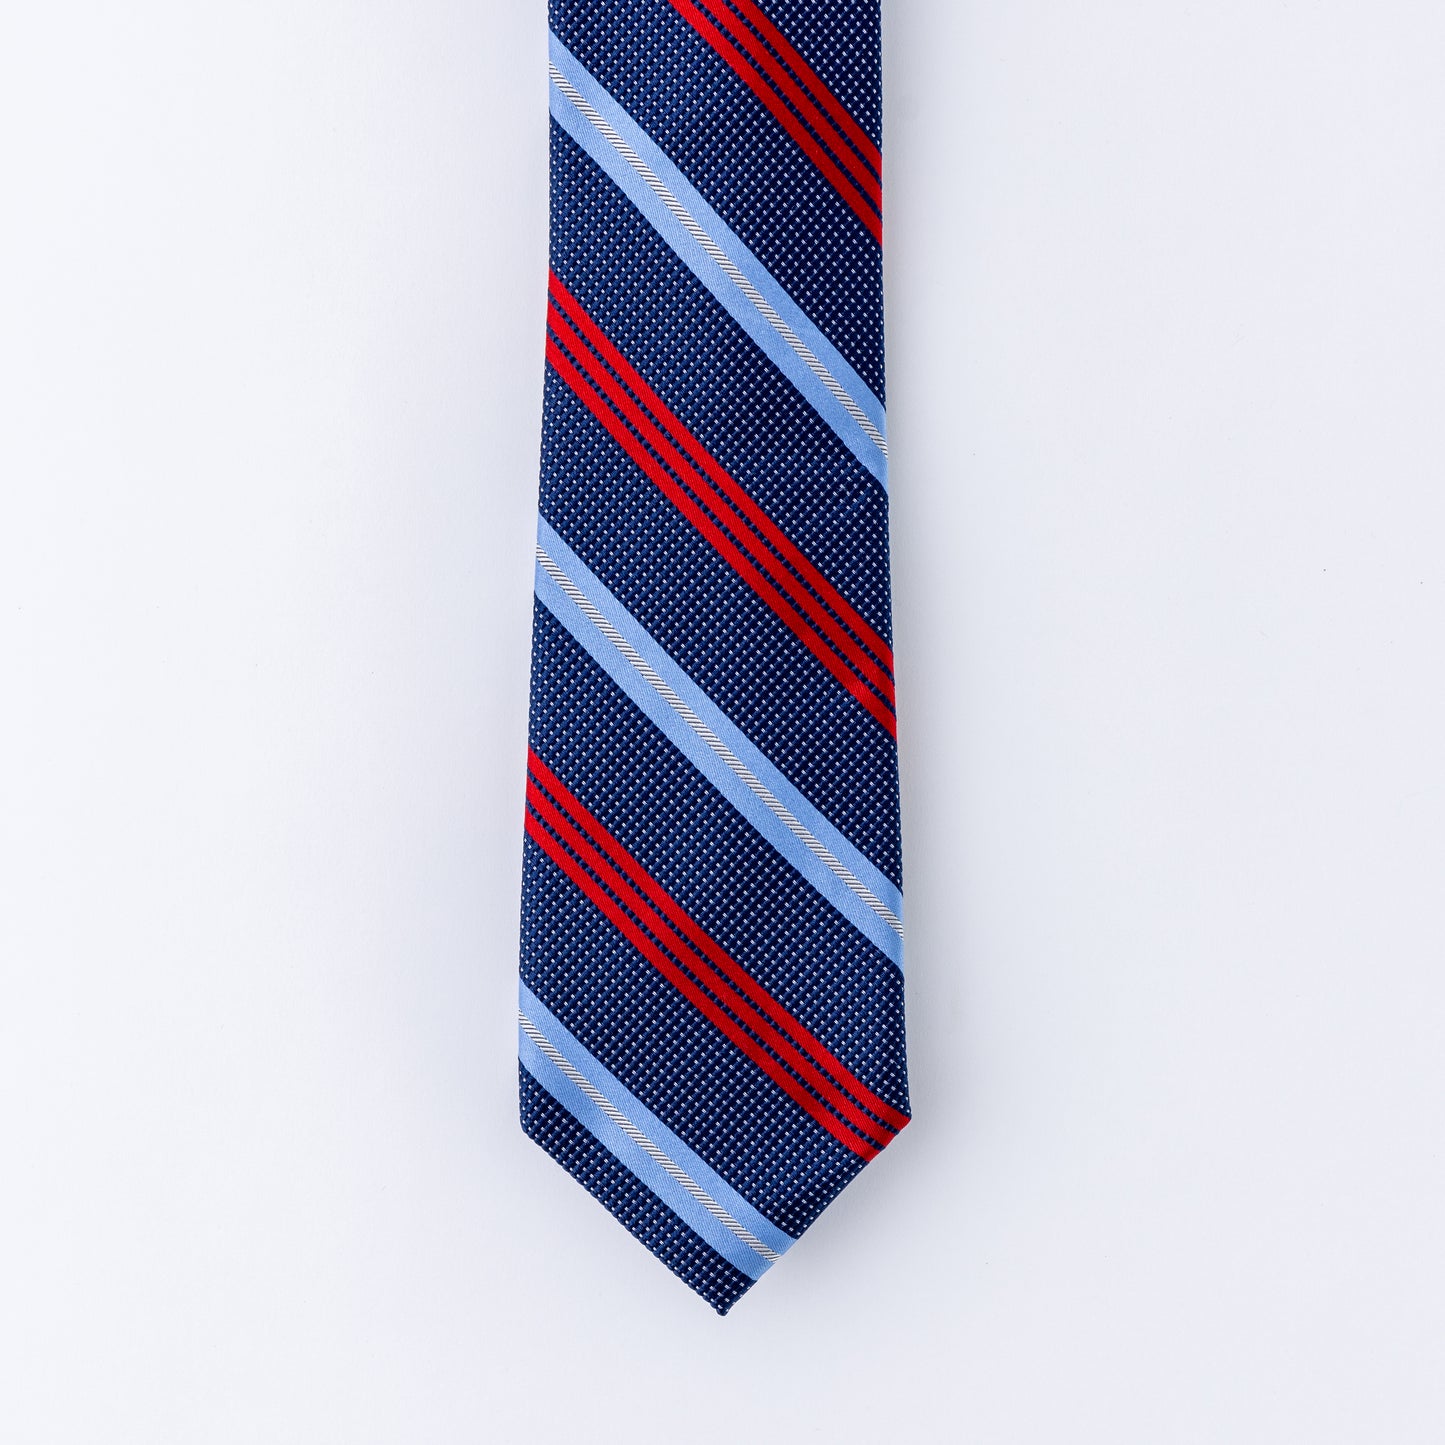 Double Stripe Tie - 2 Colors Available